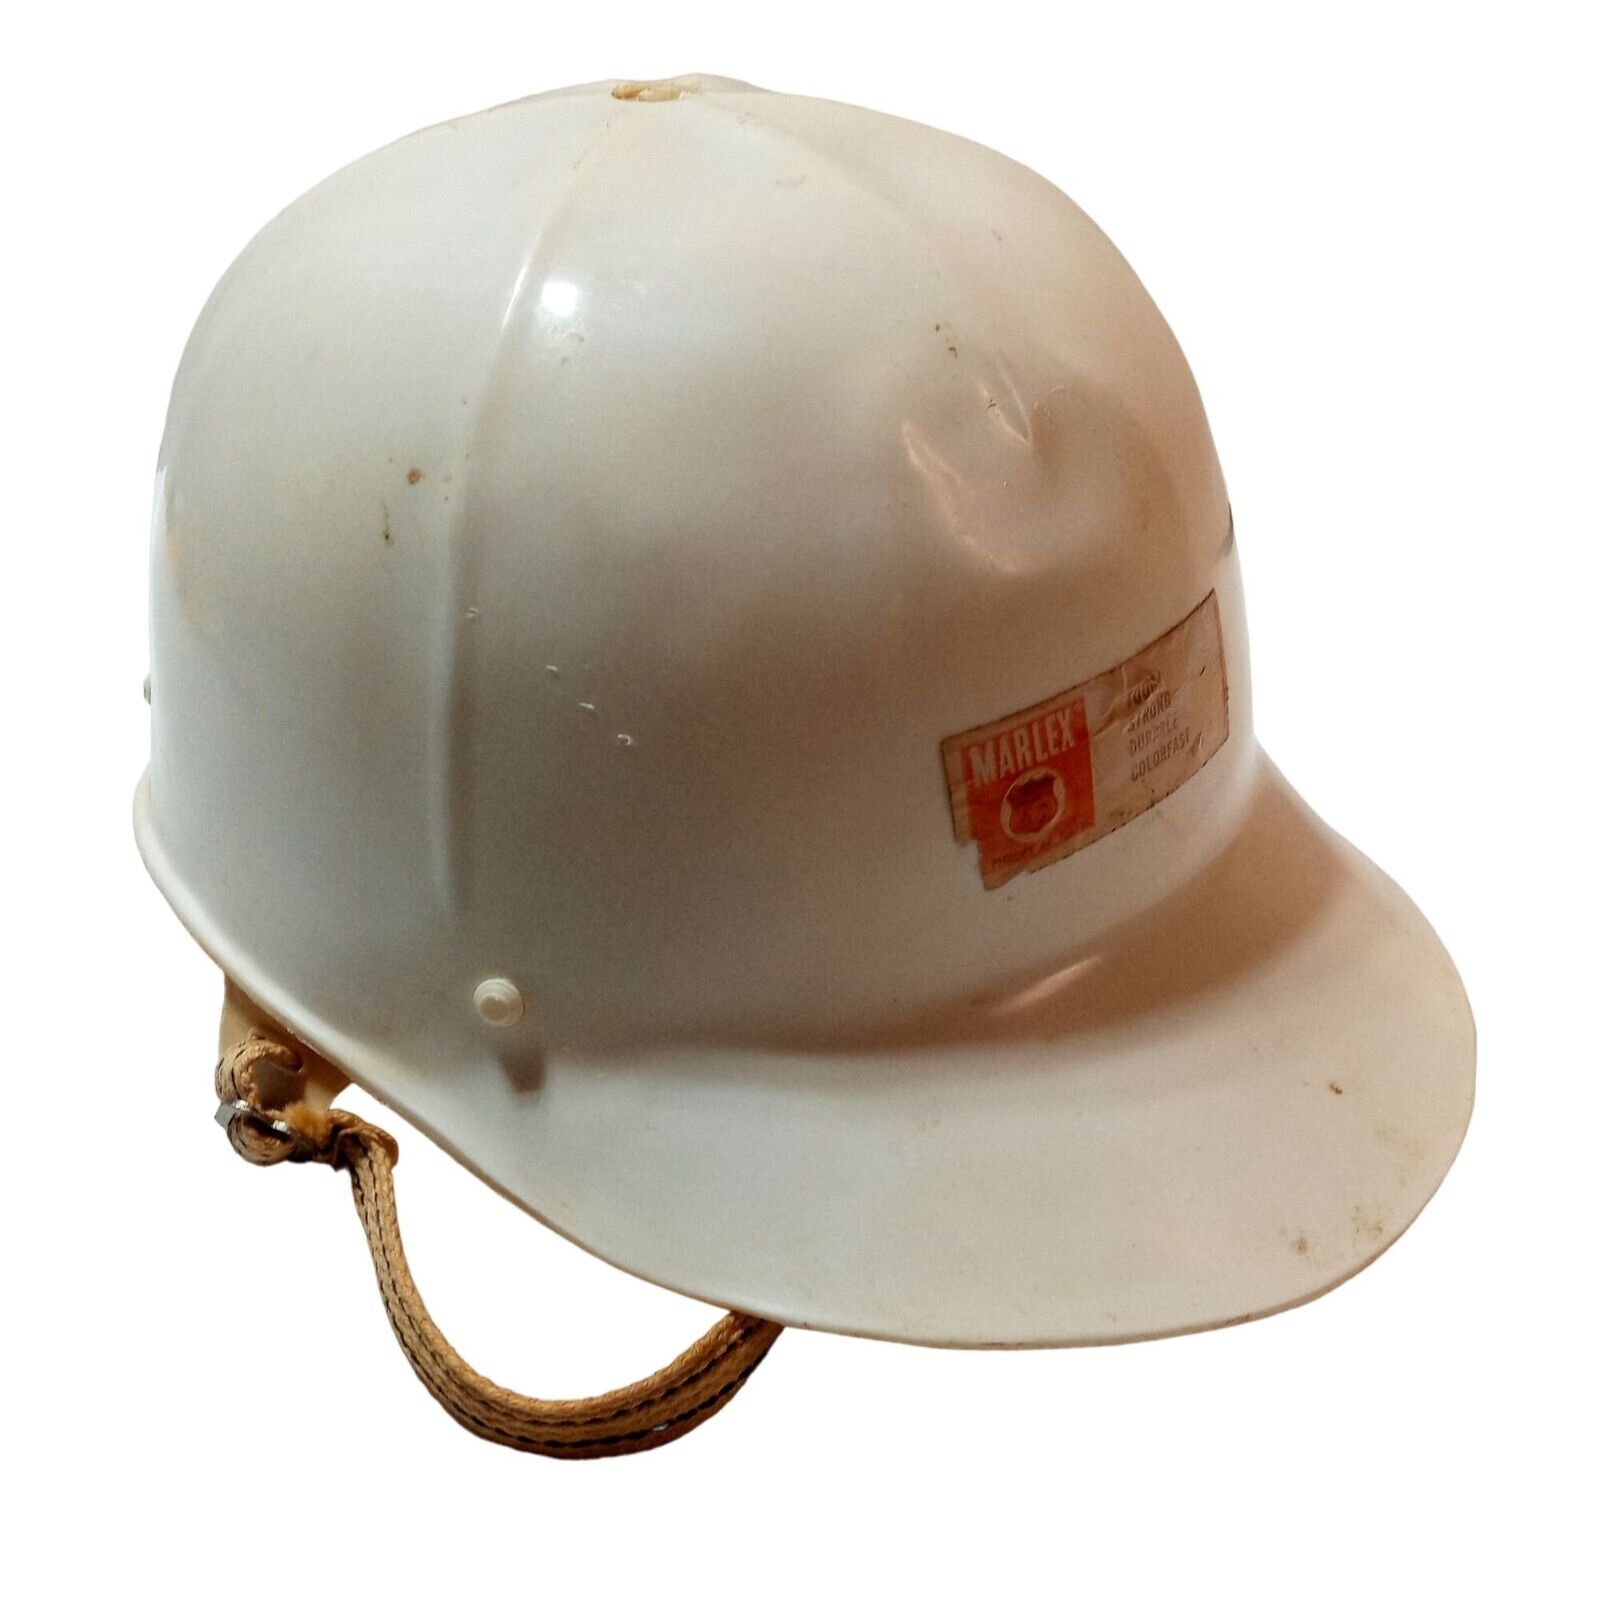 Marlex Phillips 66 Hard Hat Helmet Como Plastics Vintage Construction Mining Col